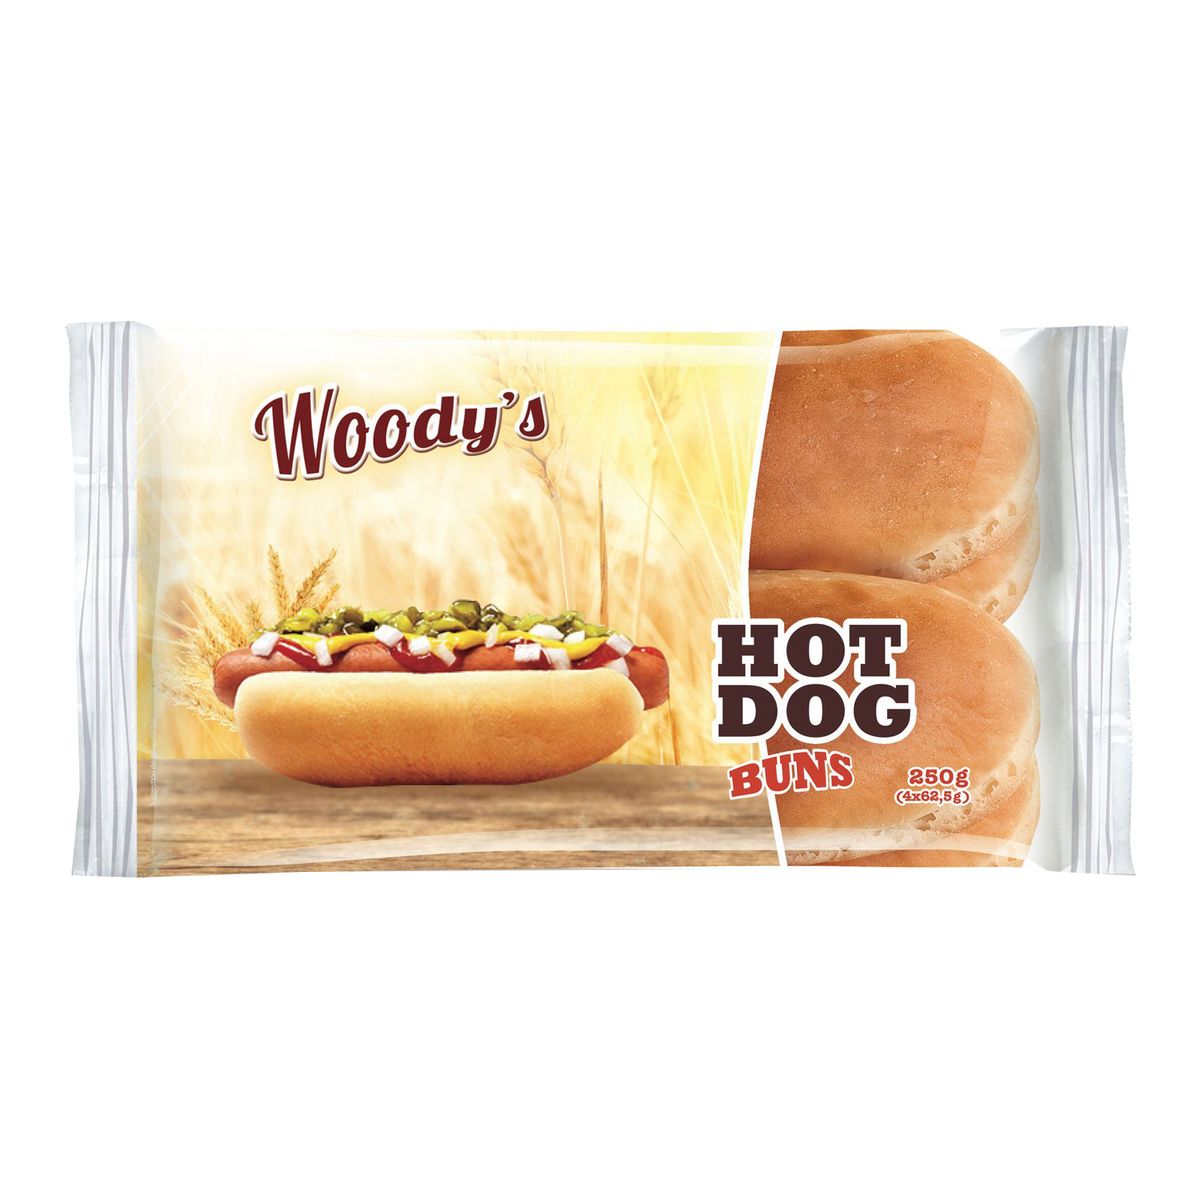 WOODY'S Hot dog buns 250g